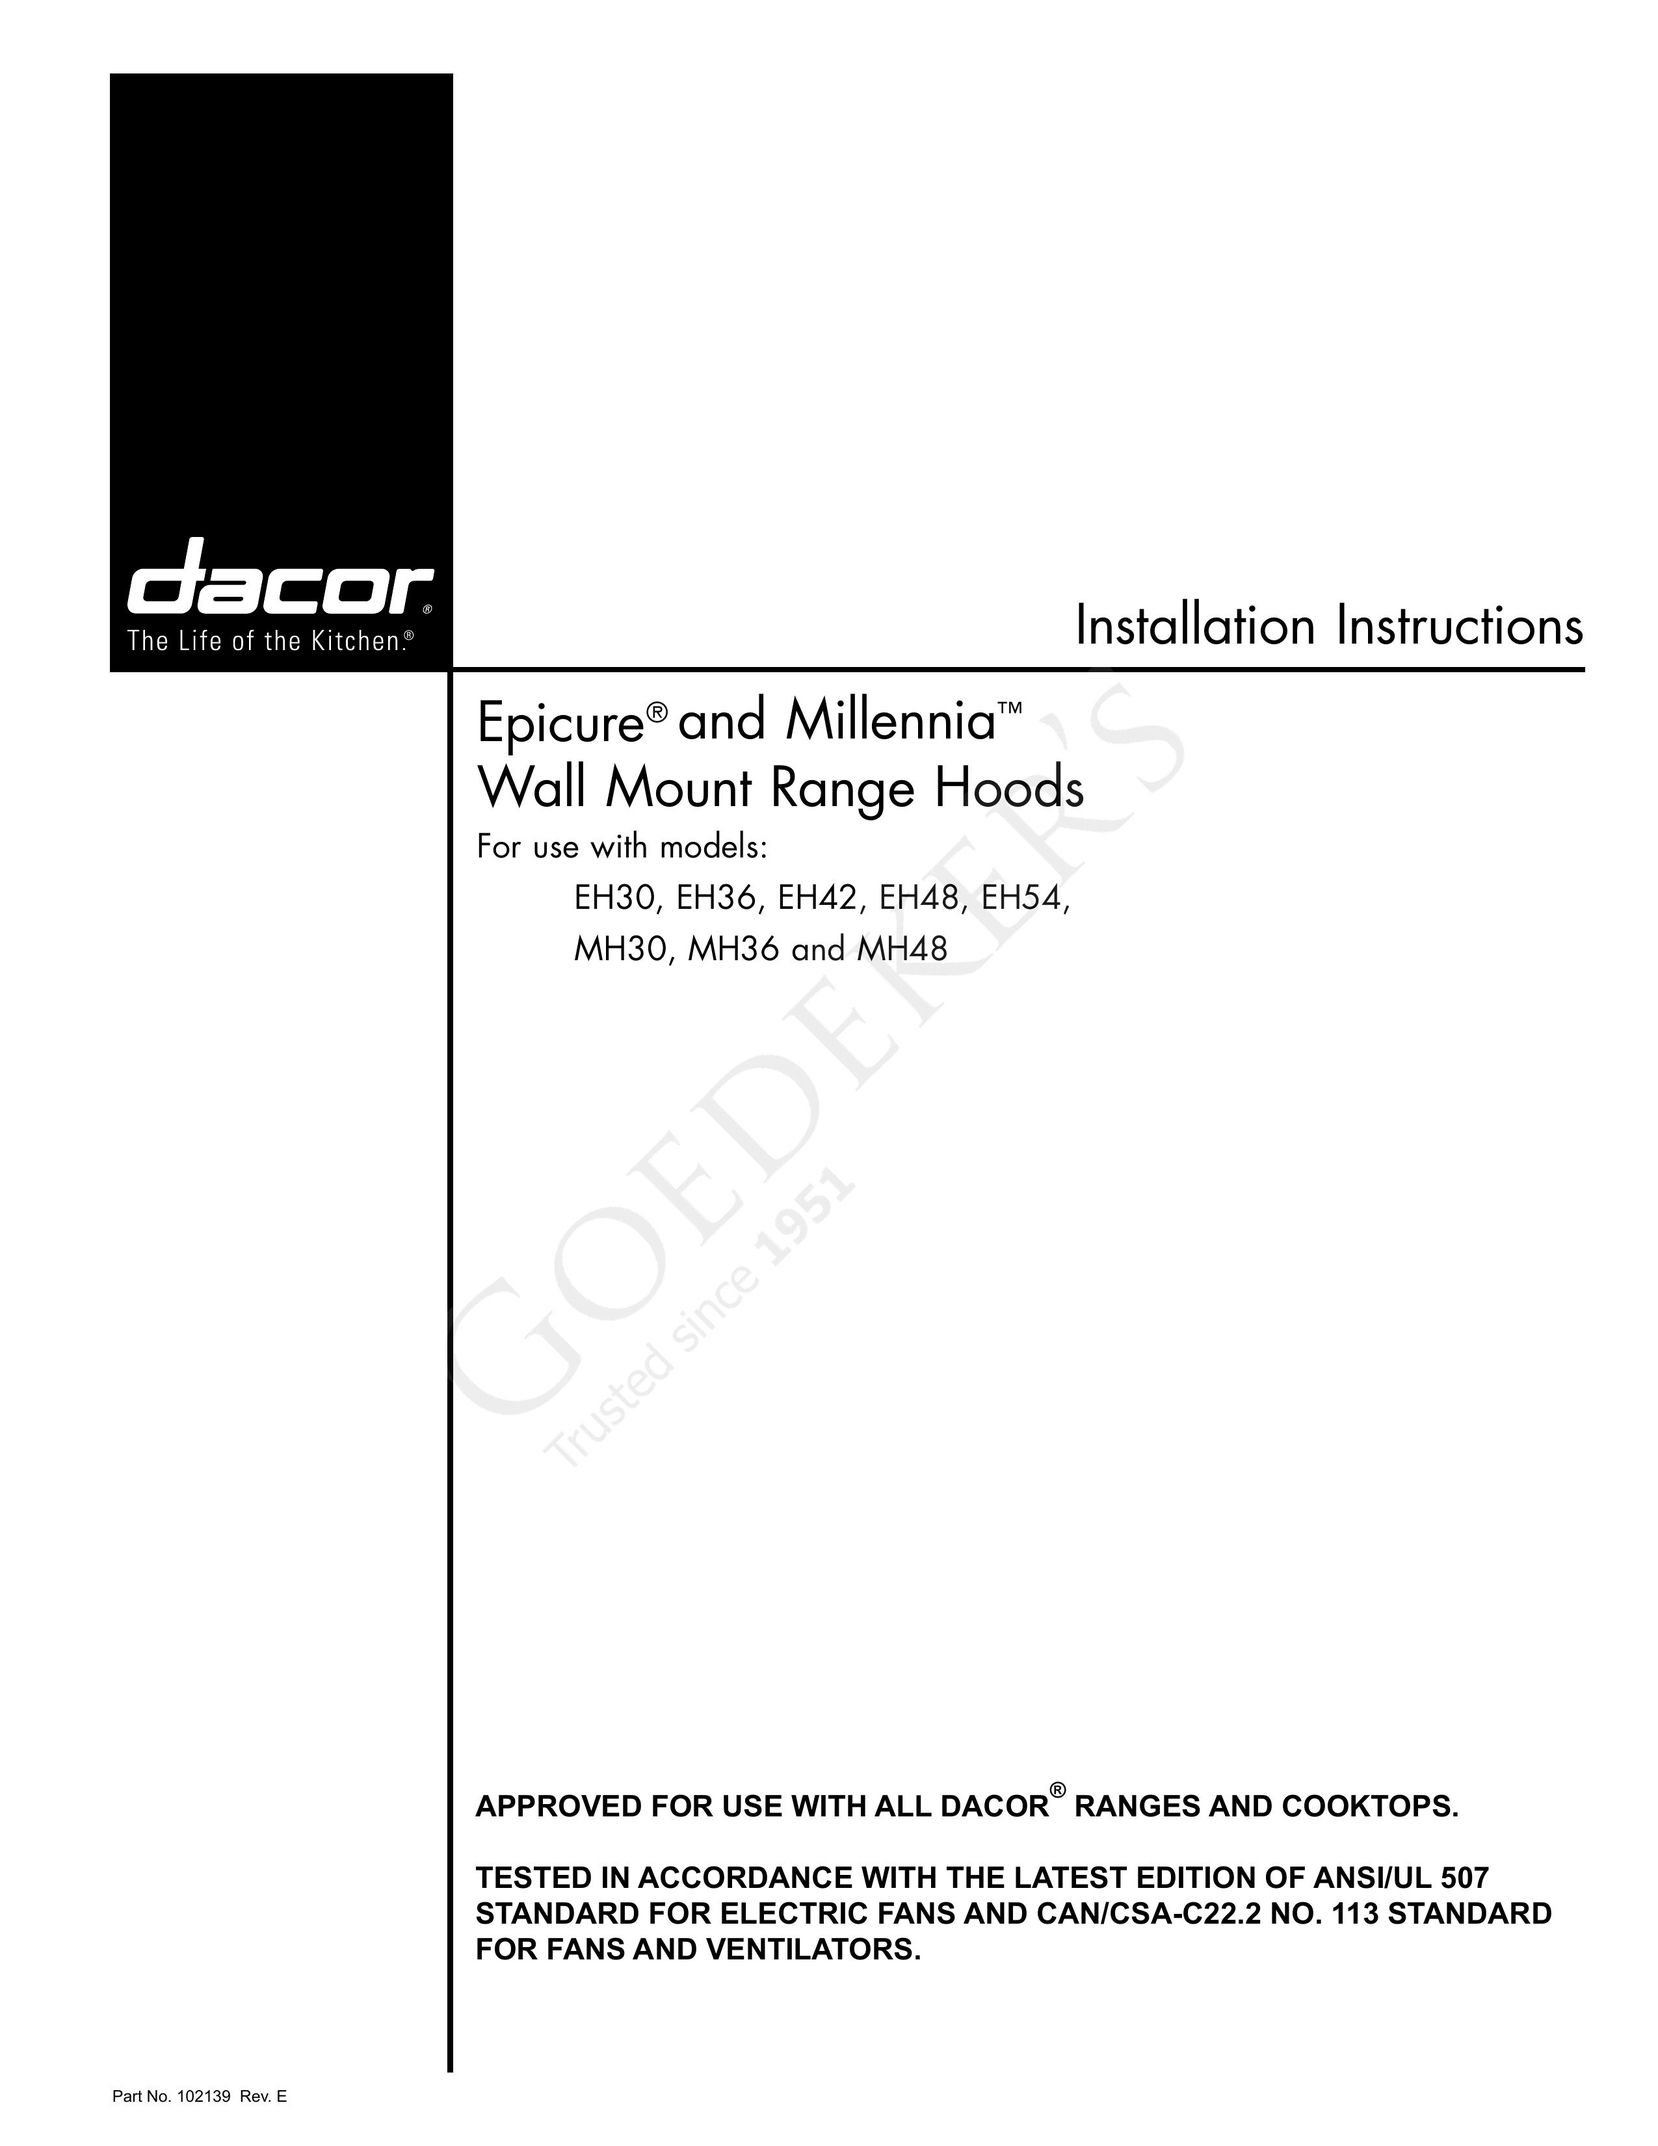 Dacor EH54 Stove User Manual